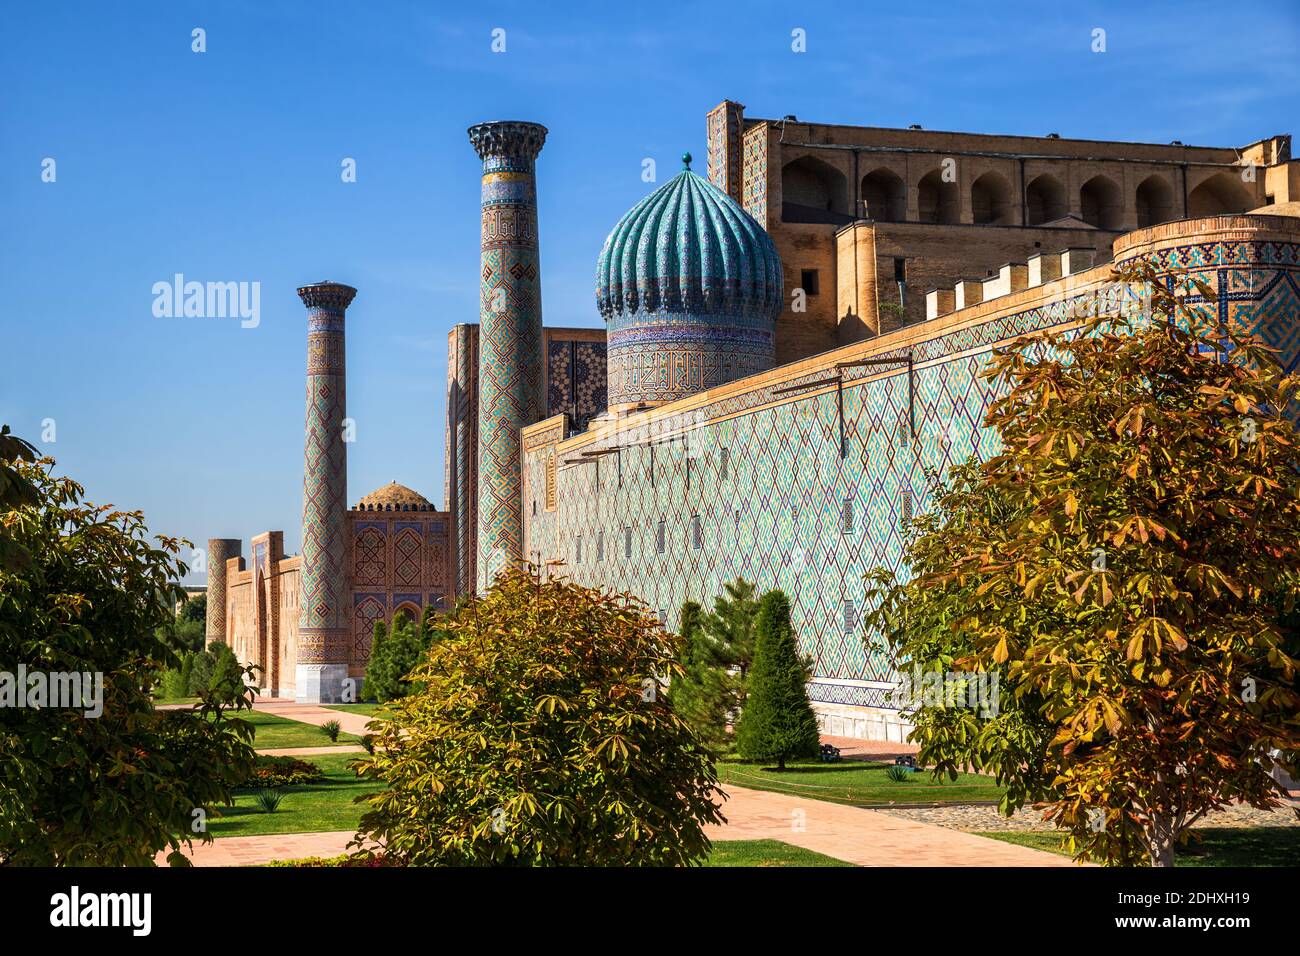 Eastern architecture - domes and minarets of madrasah on Registan Square, Samarkand, Uzbekistan Stock Photo